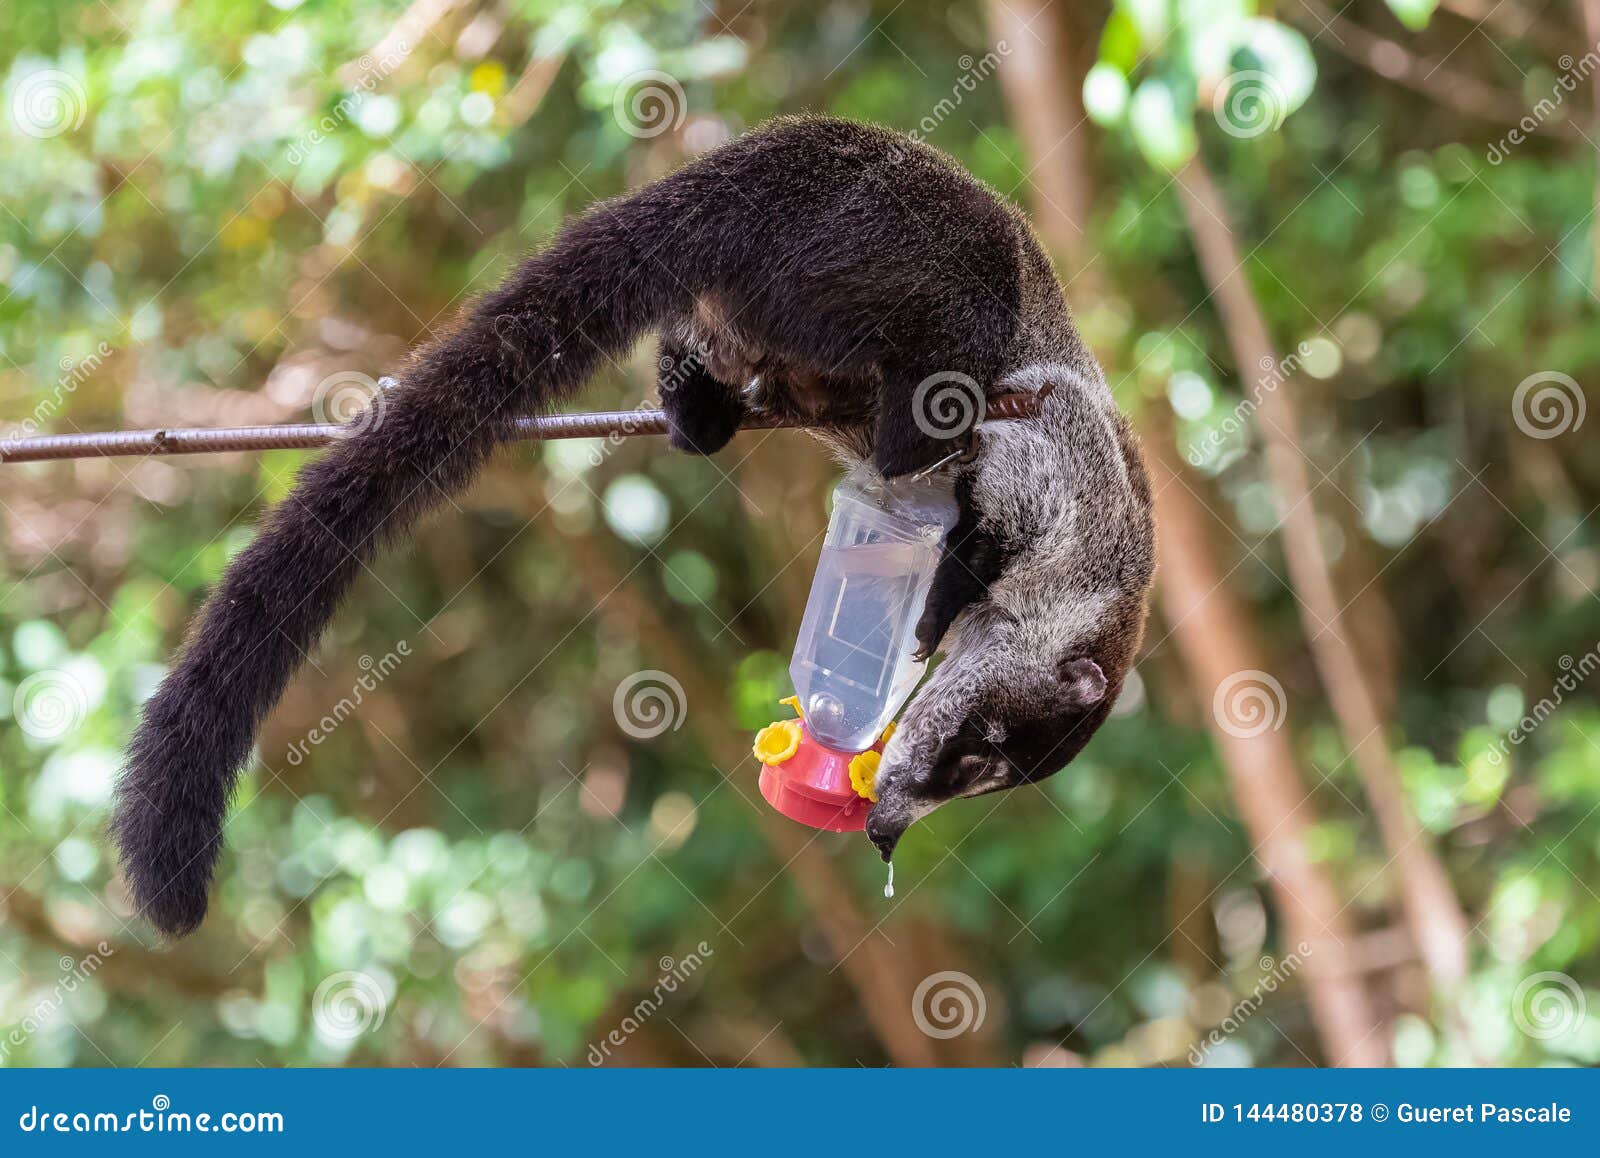 A coati climbing stock photo. Image of eating, america ...